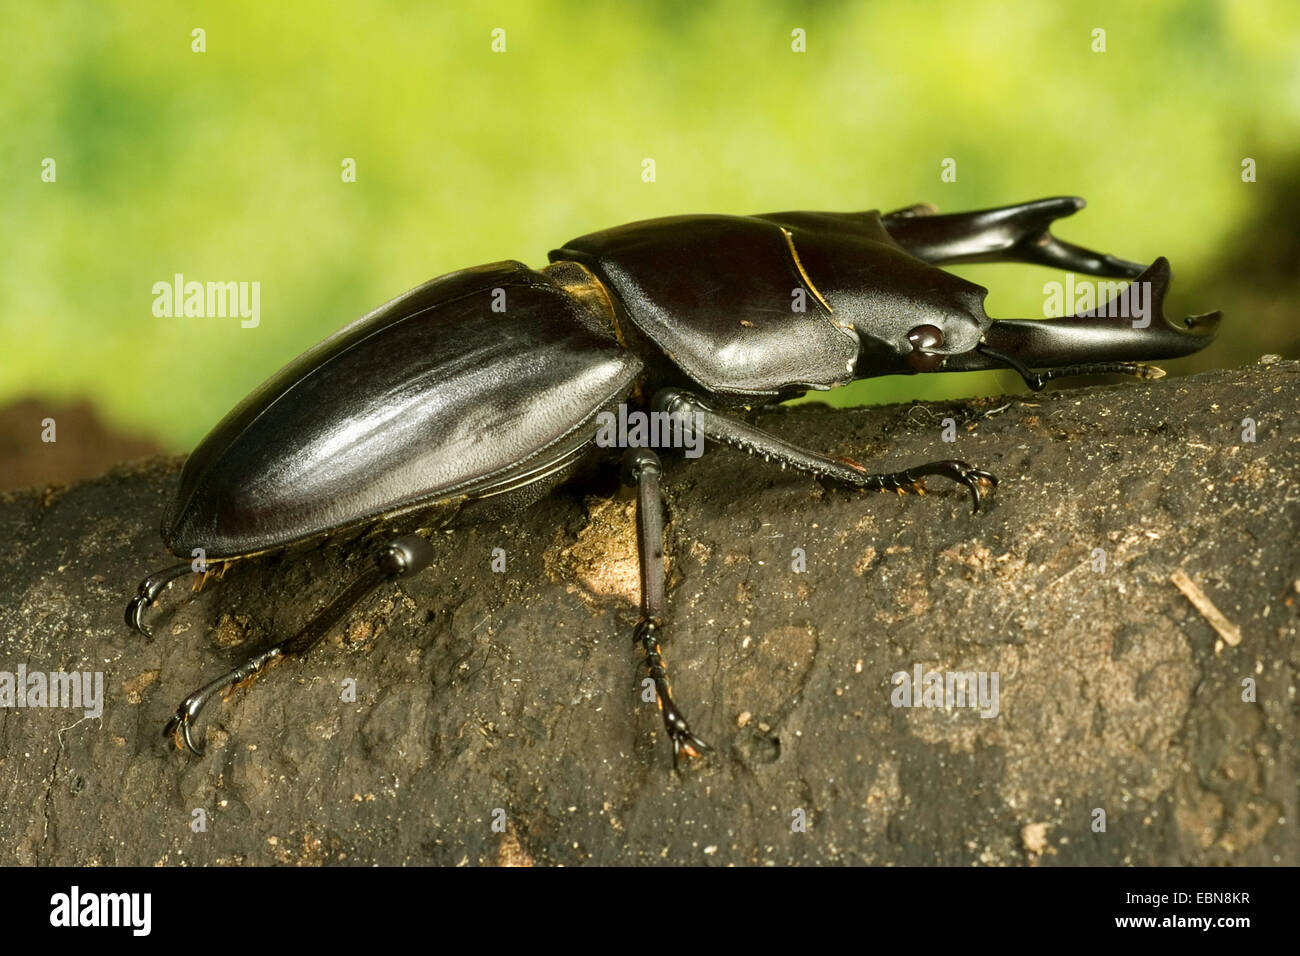 Stag Beetle; Odontolabis sinensis (Odontolabis sinensis), male, close-up view Stock Photo